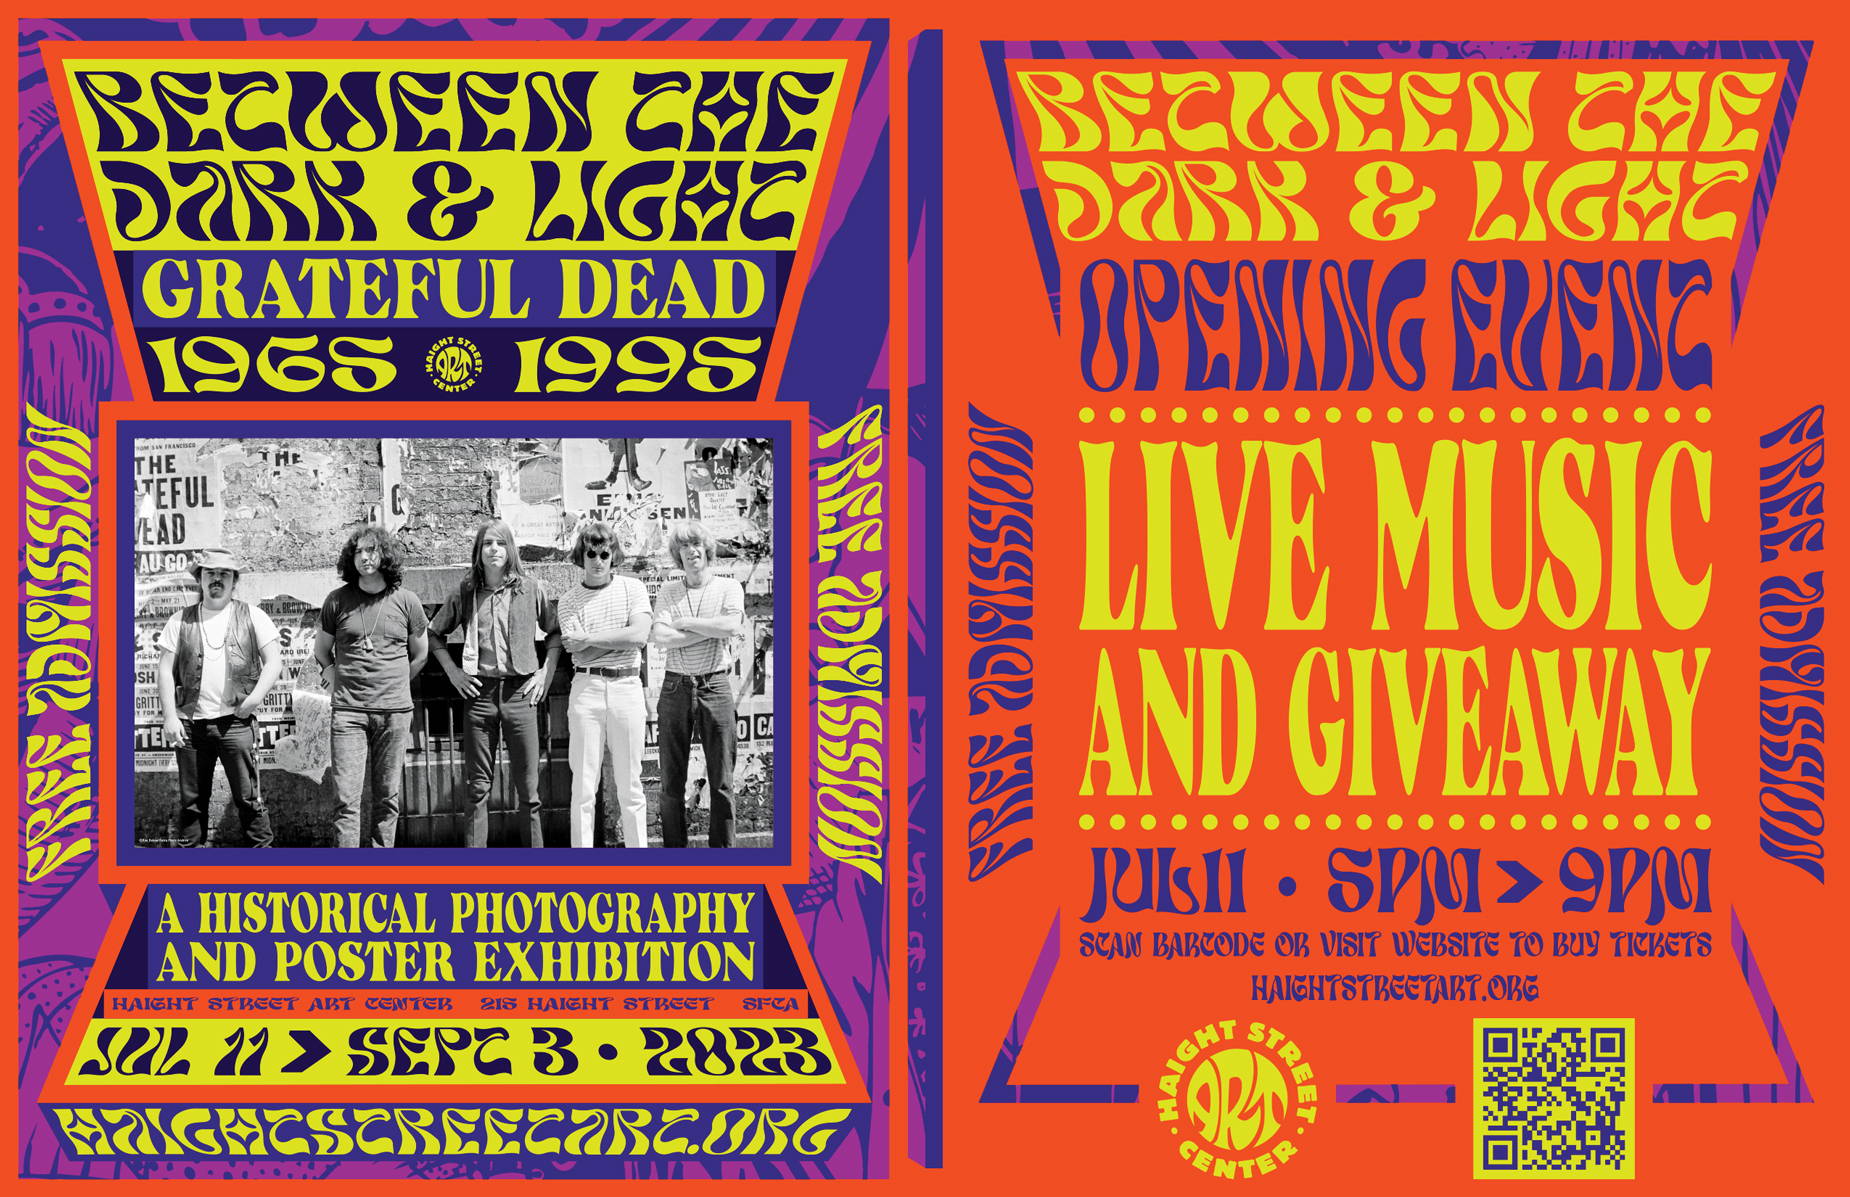 Haight Street Art Center to Host 'Between the Dark and Light: Grateful Dead  1965-1995' Exhibit